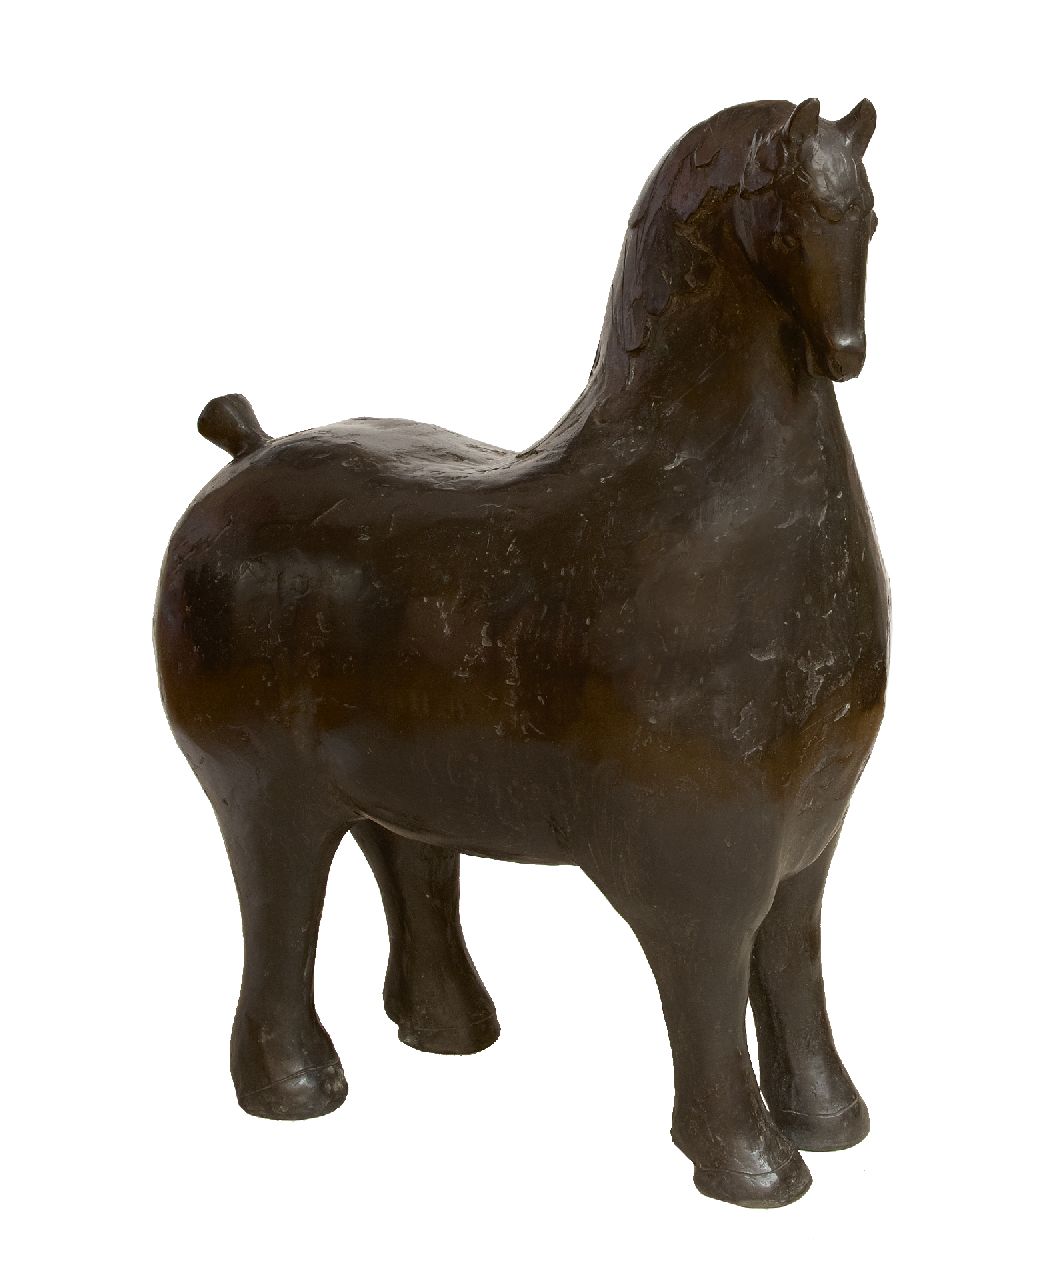 Hemert E. van | Evert van Hemert, Jikke, patinated bronze 75.0 x 30.0 cm, signed with monogram on belly and executed in 2009